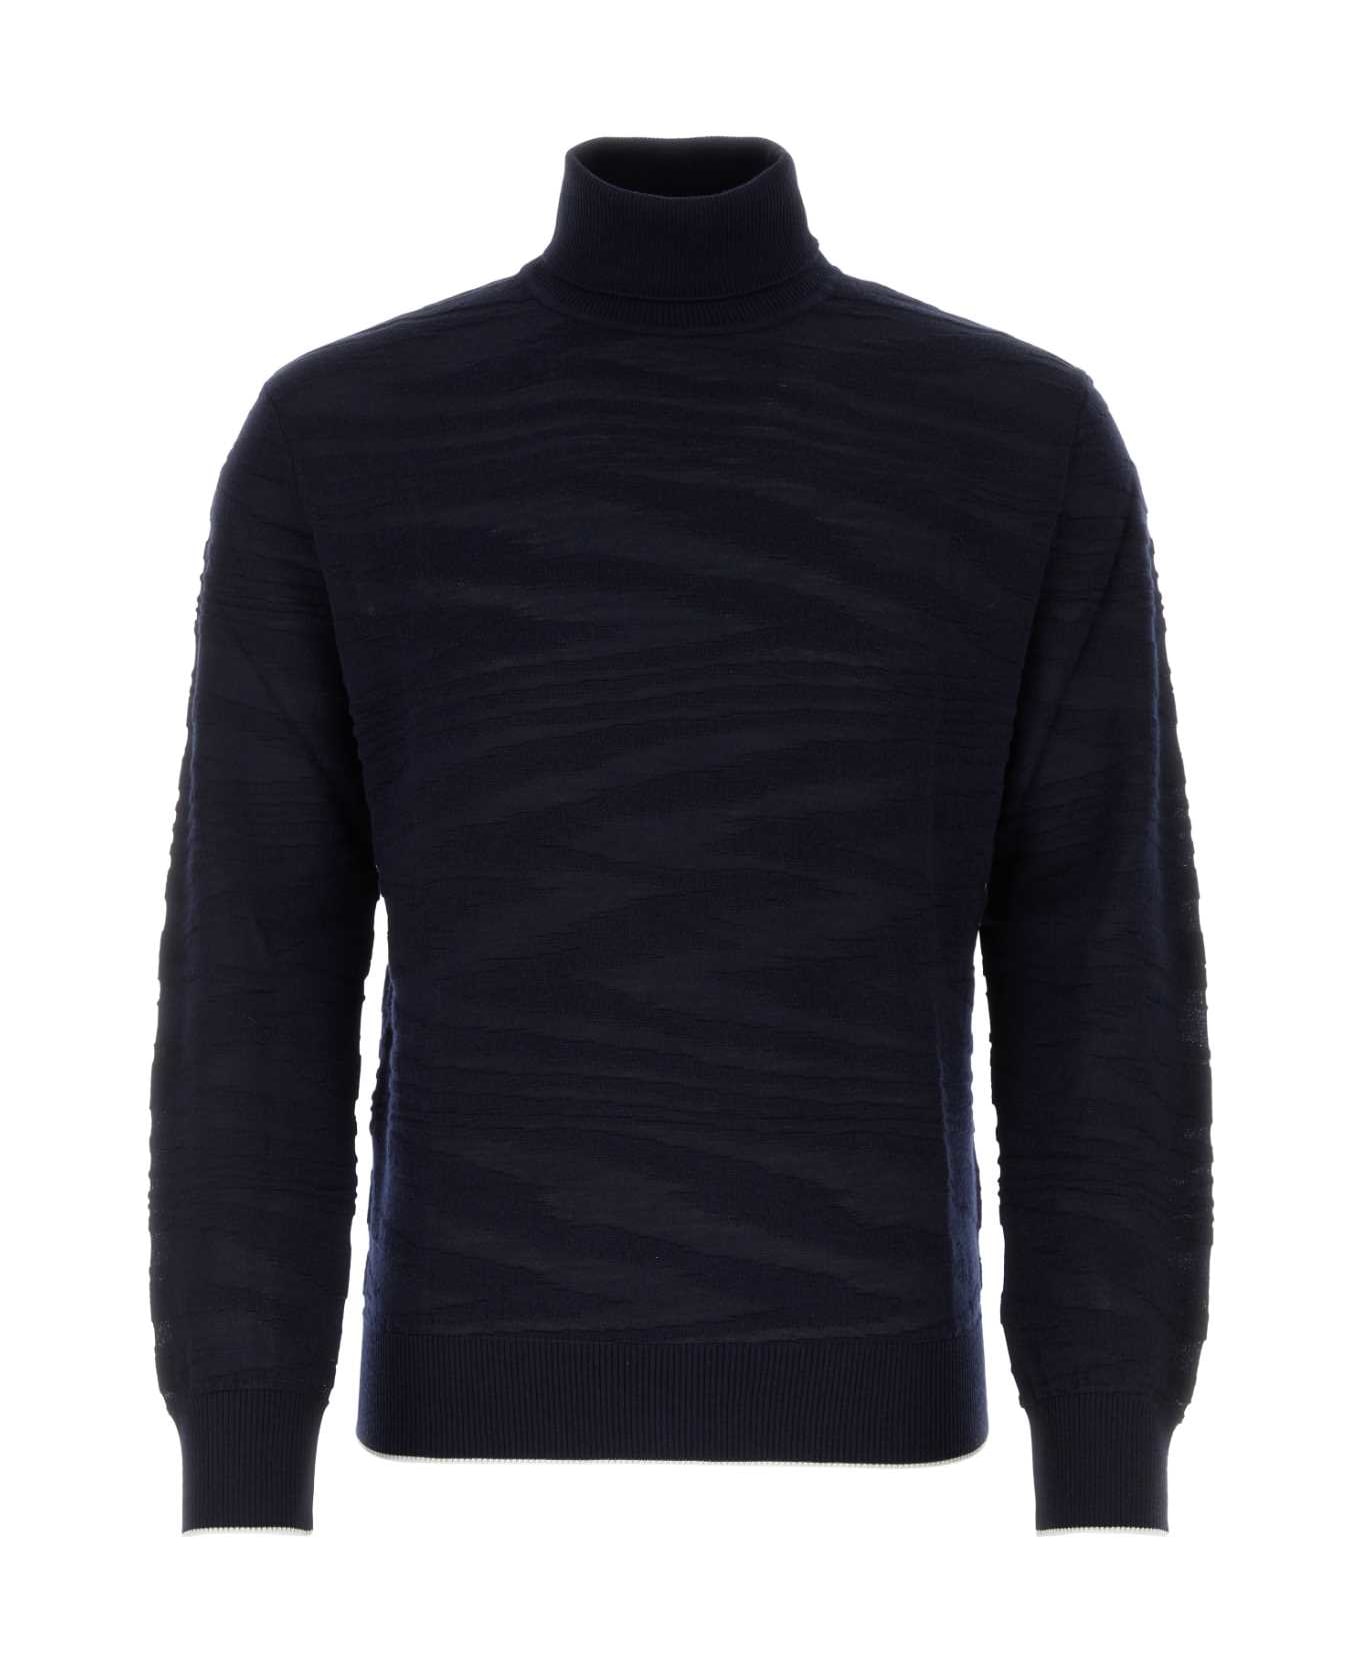 Missoni Midnight Blue Wool Blend Sweater - NAVY